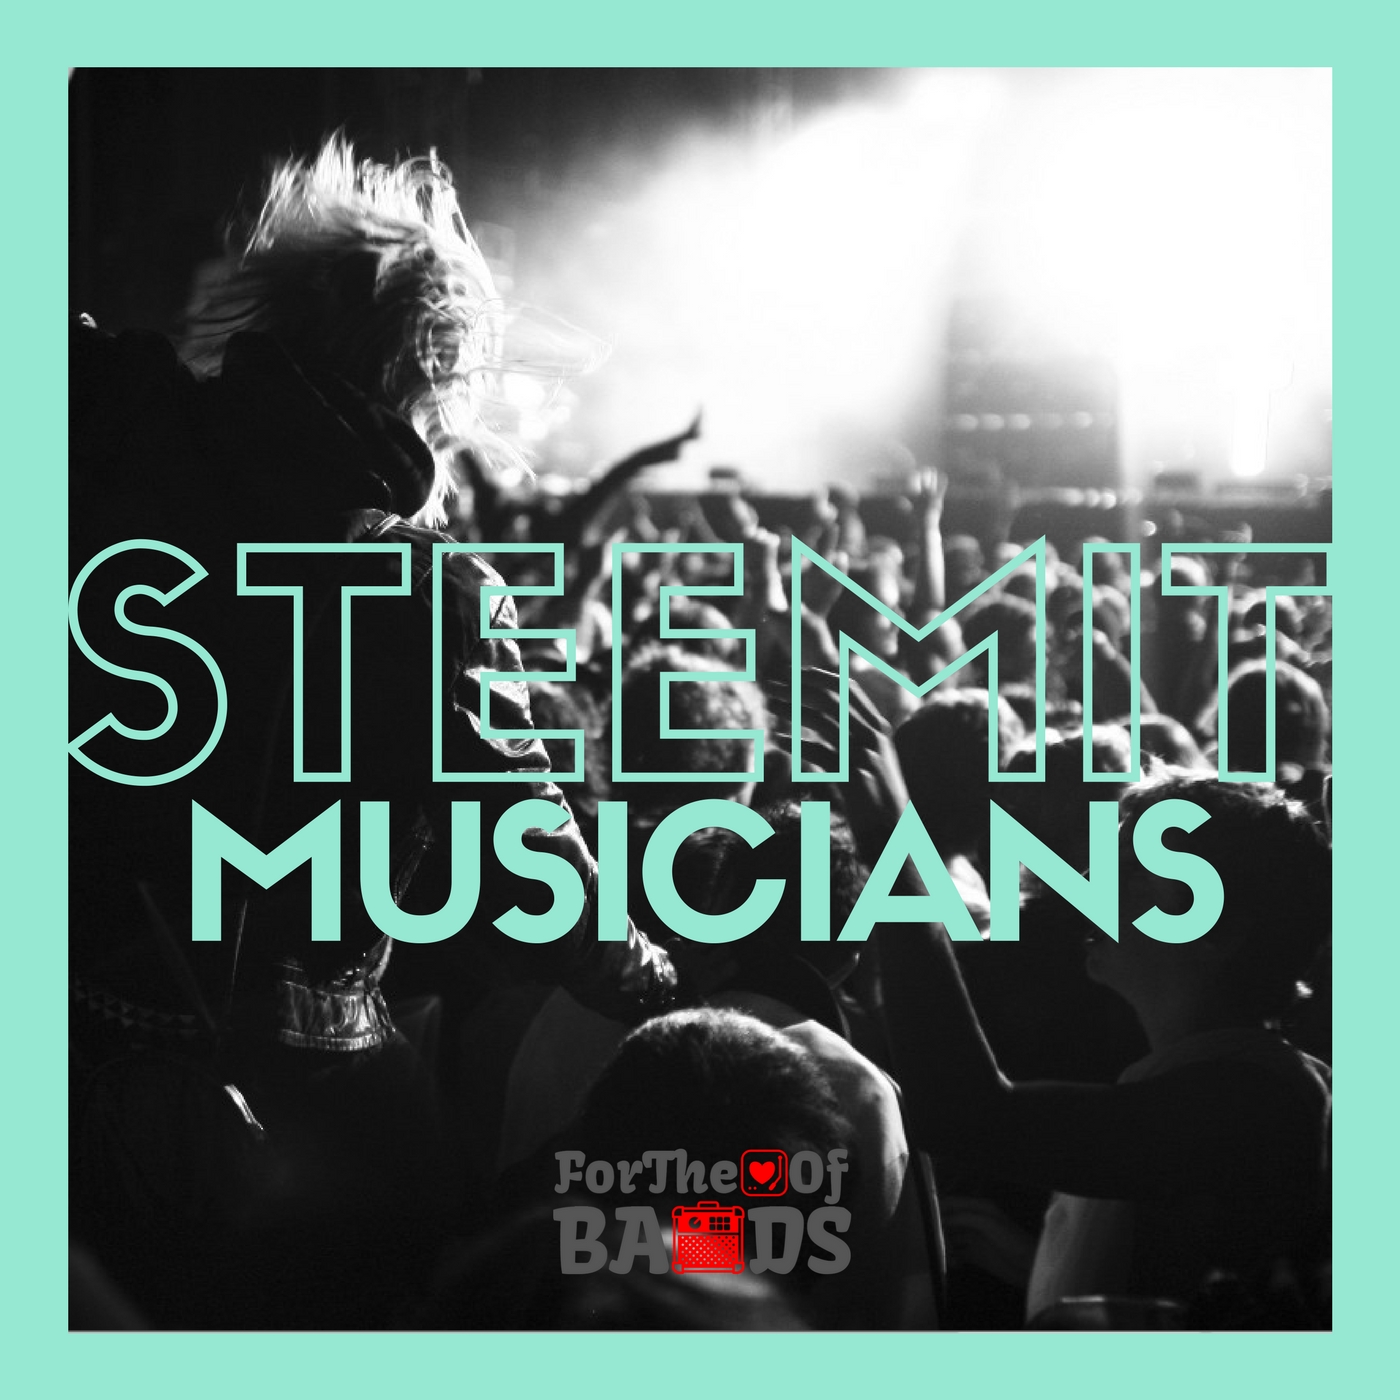 Steemit Musicians Spotify Playlist.jpg